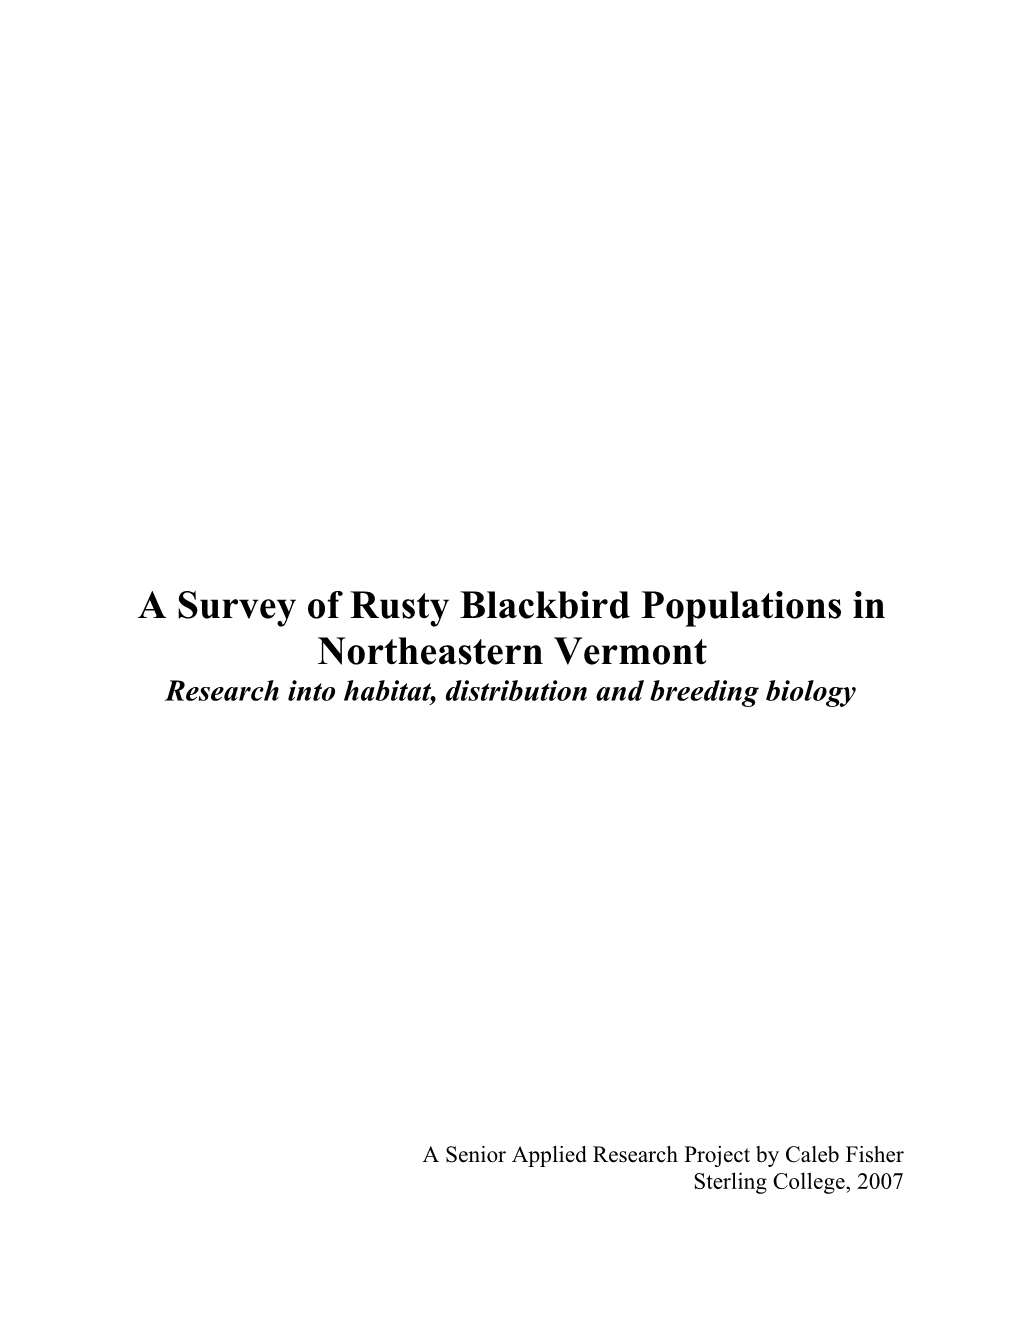 A Survey of Rusty Blackbird Populations in Northeastern Vermont